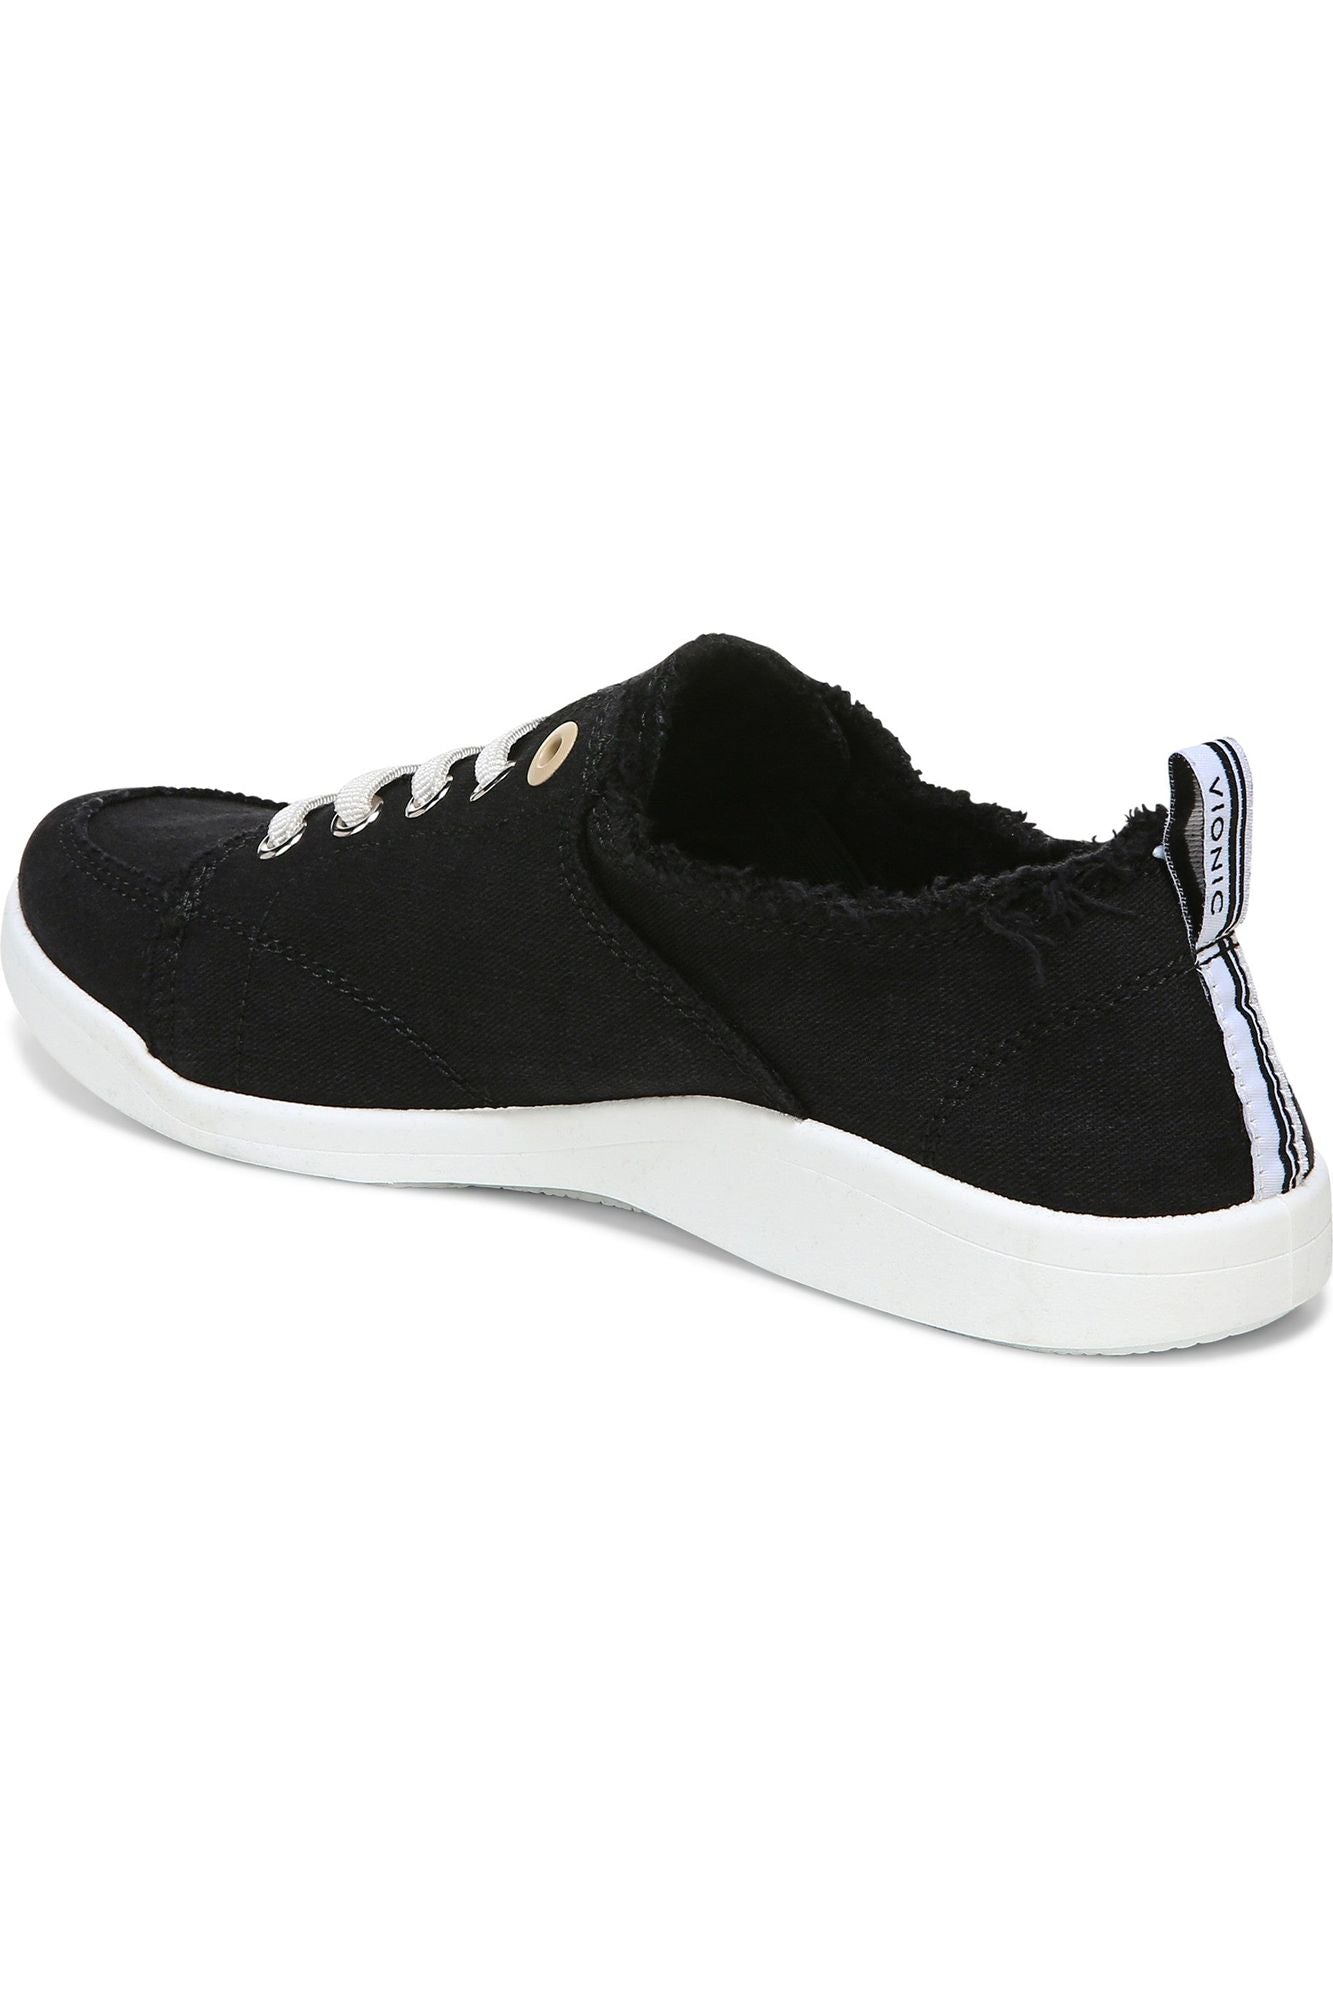 Vionic Canvas Sneaker - Style Pismo BLK, side4